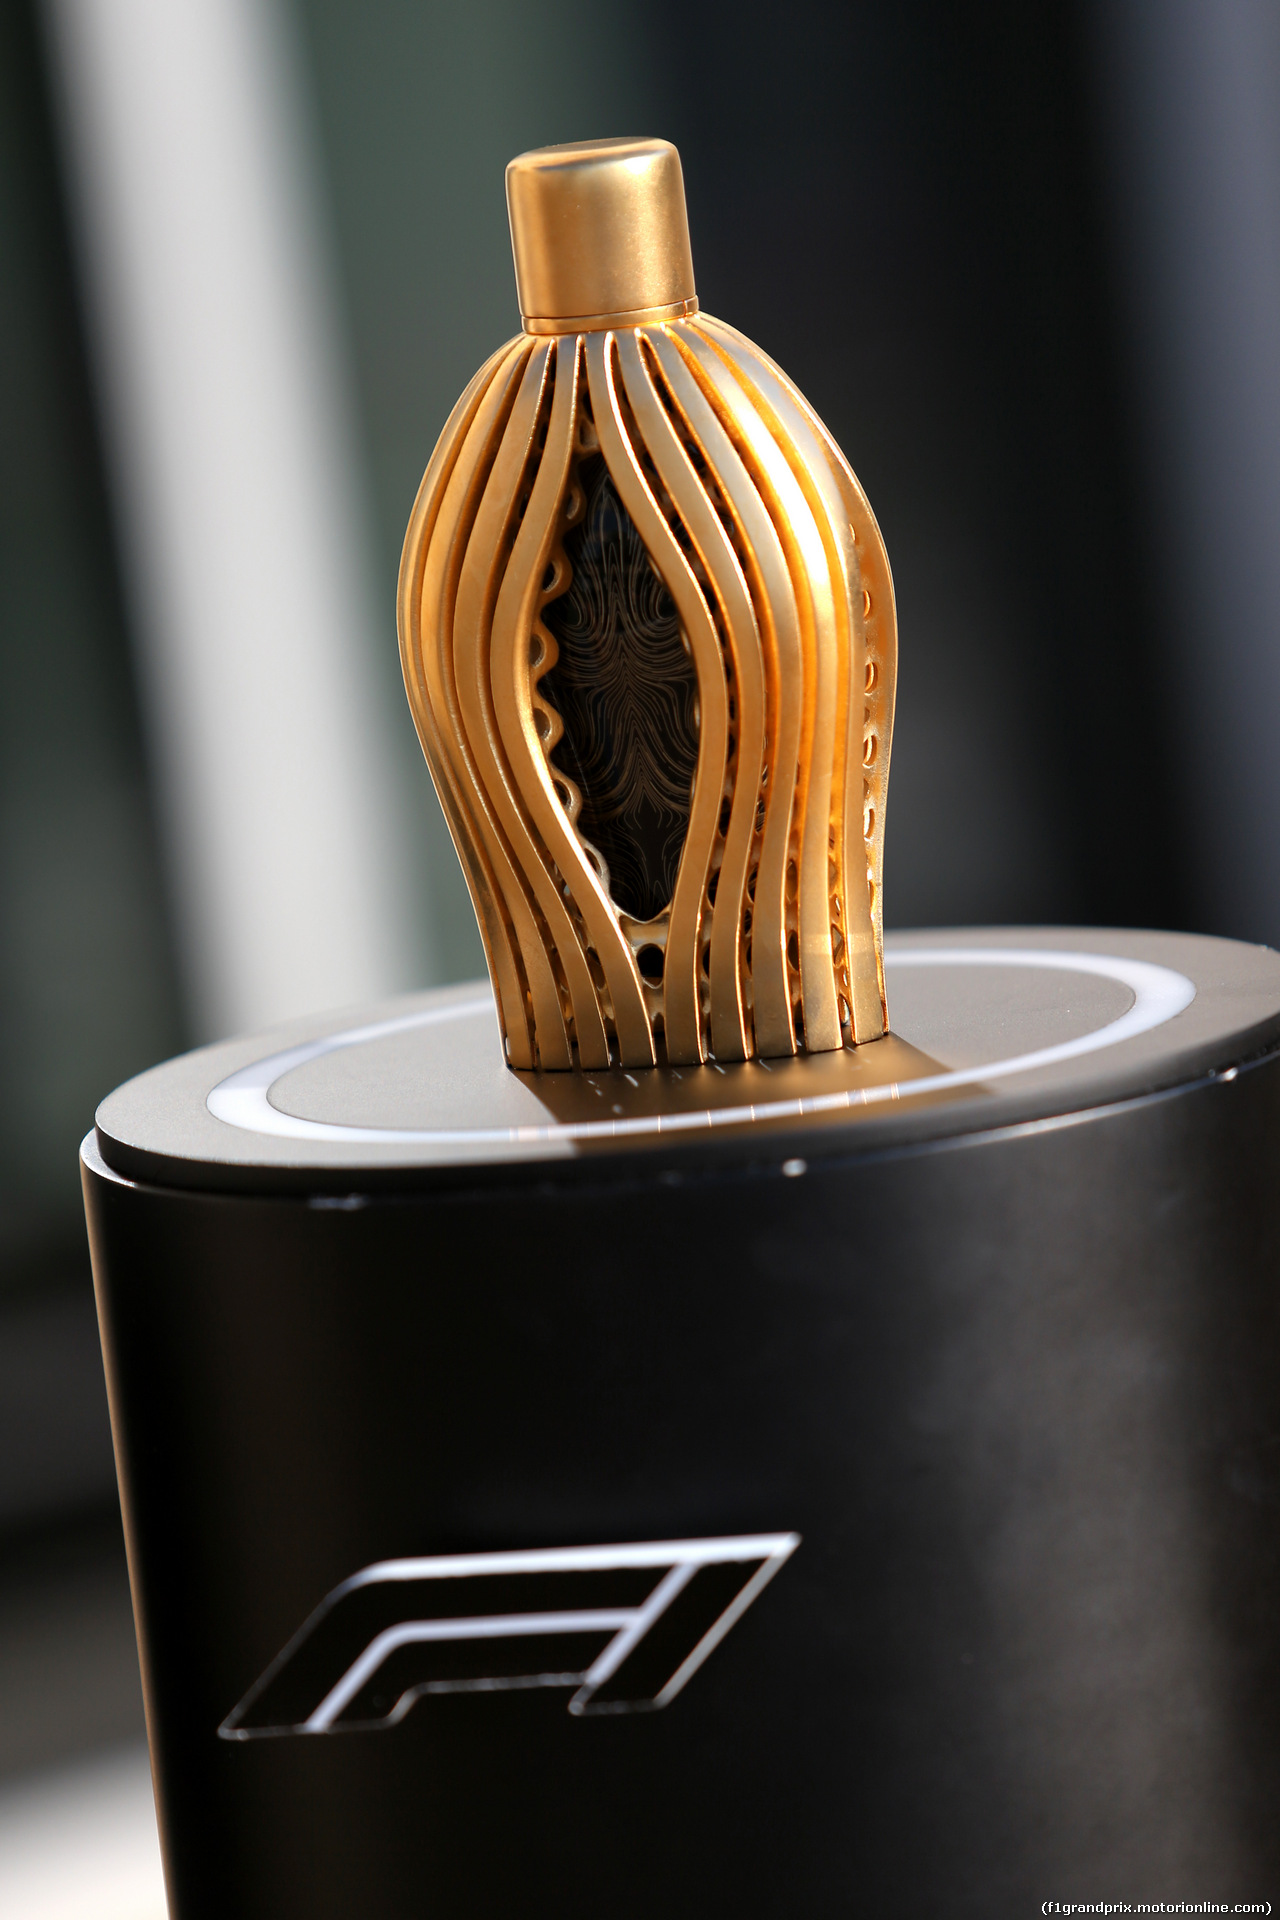 GP ABU DHABI, F1 perfume created by Designer Parfums in the paddock.
29.11.2019.